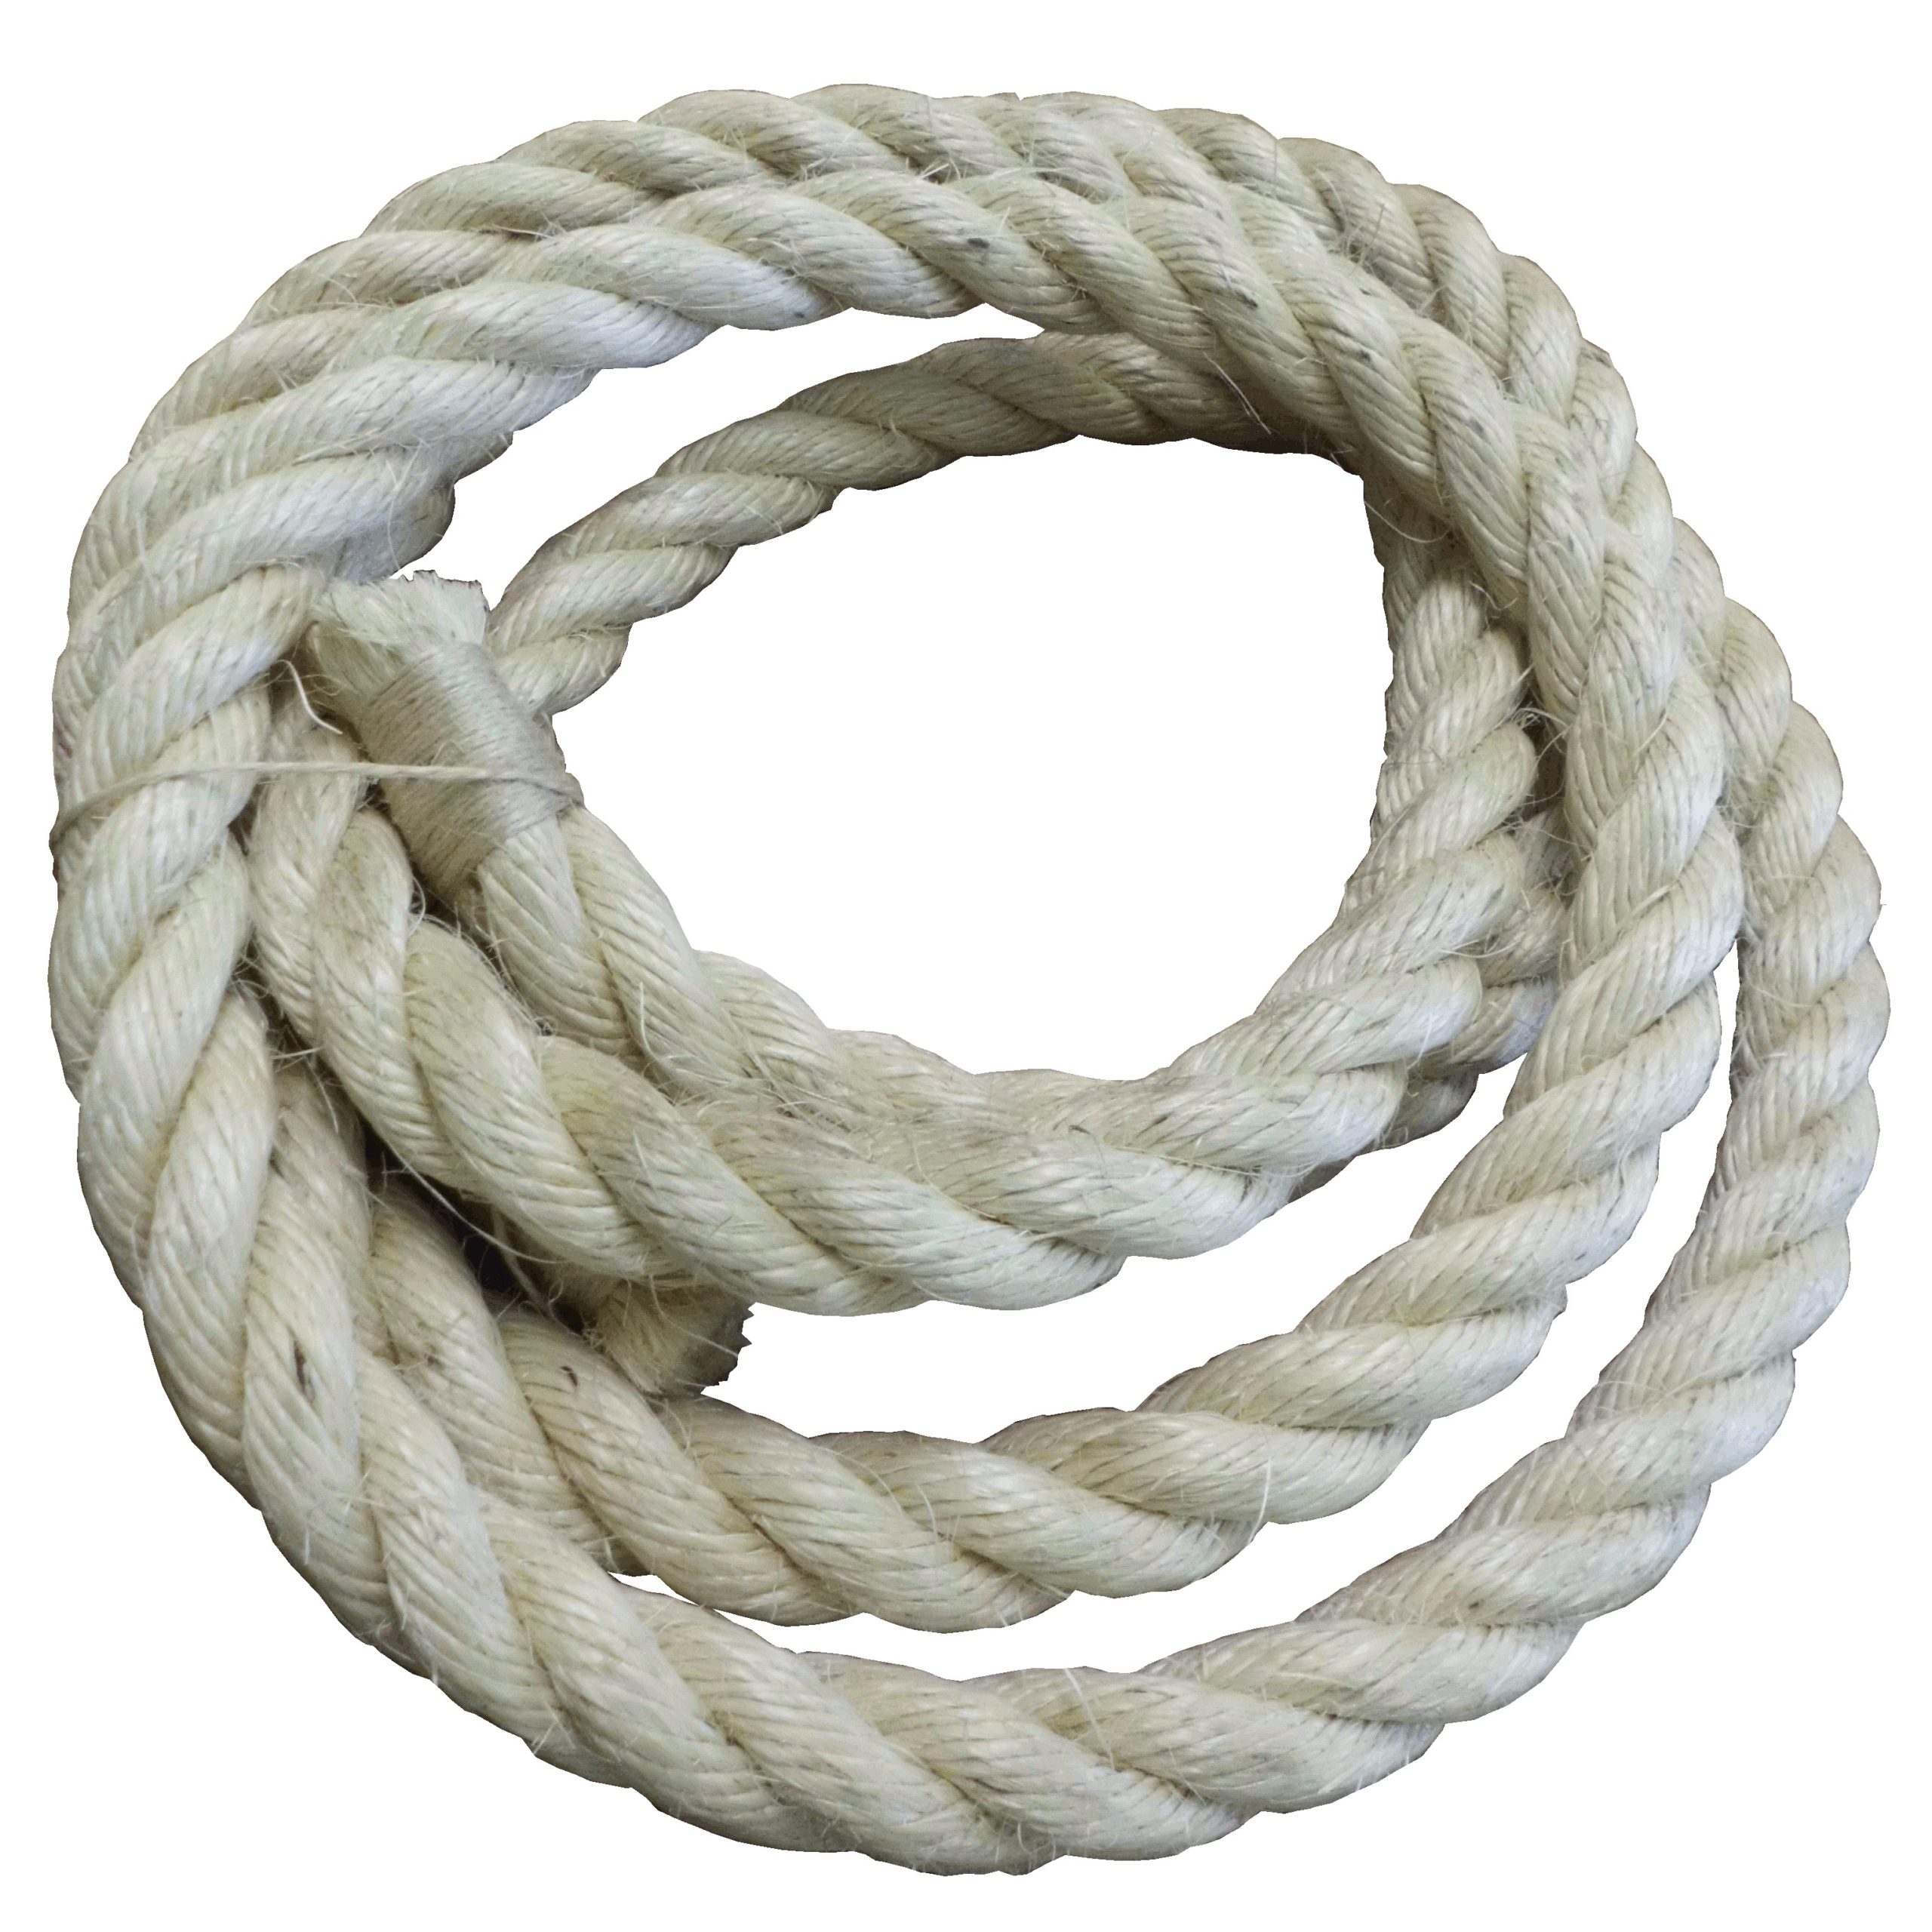 Tug of war rope - four way tug of rope, tug of war ropes